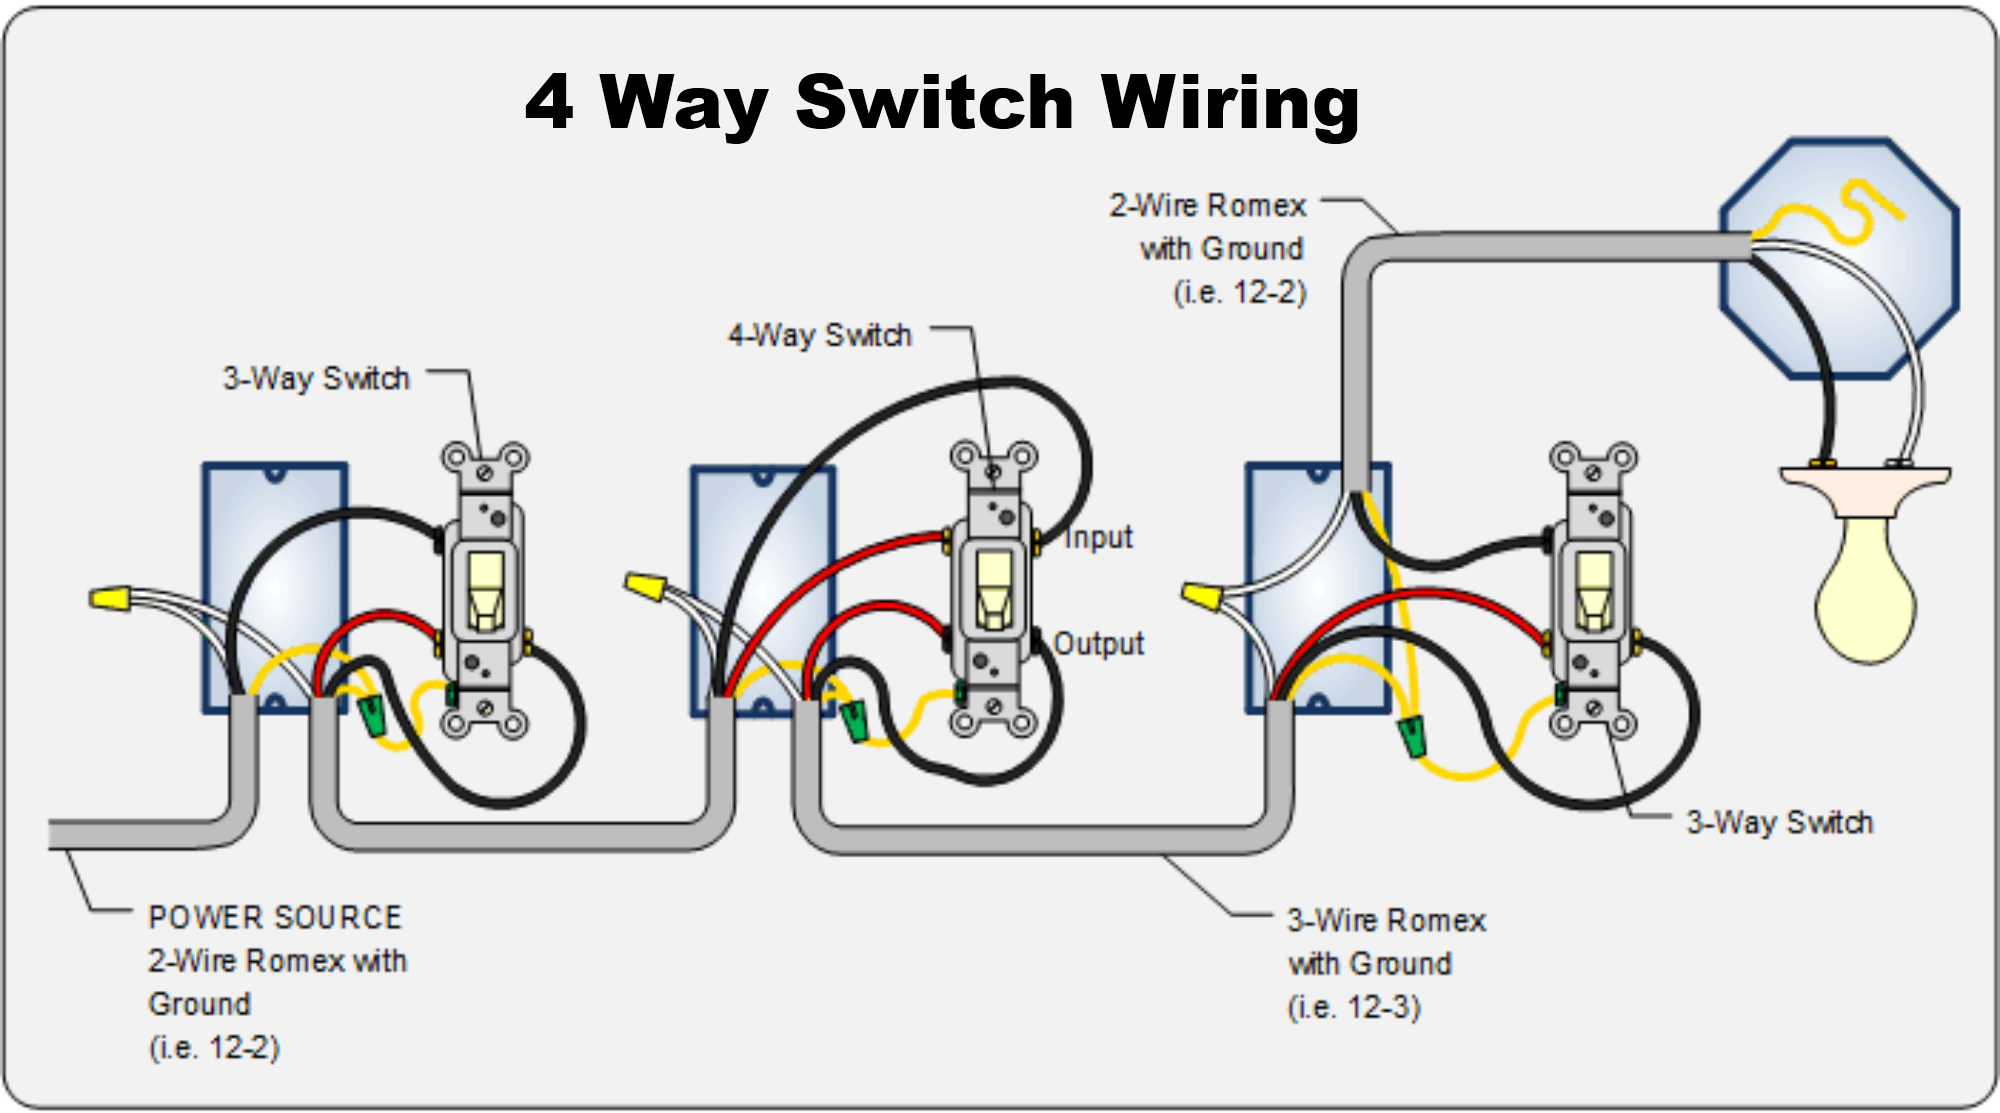 4-way switch wiring procedures